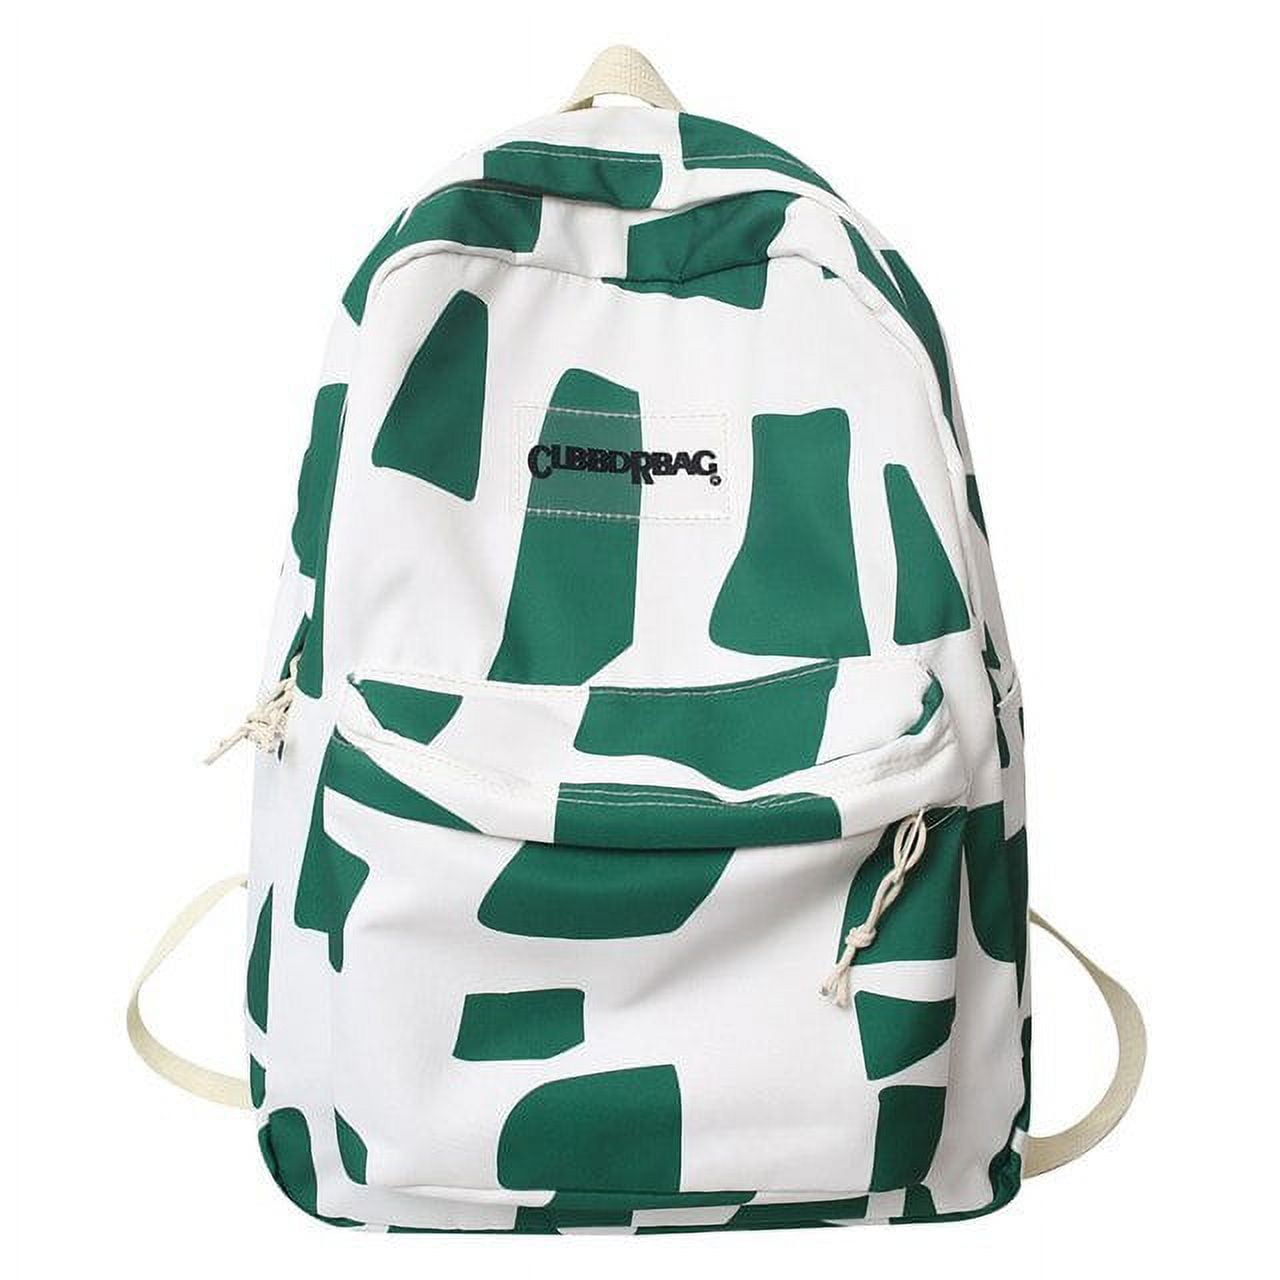 Buy Supreme Backpack College Bag for Girls at